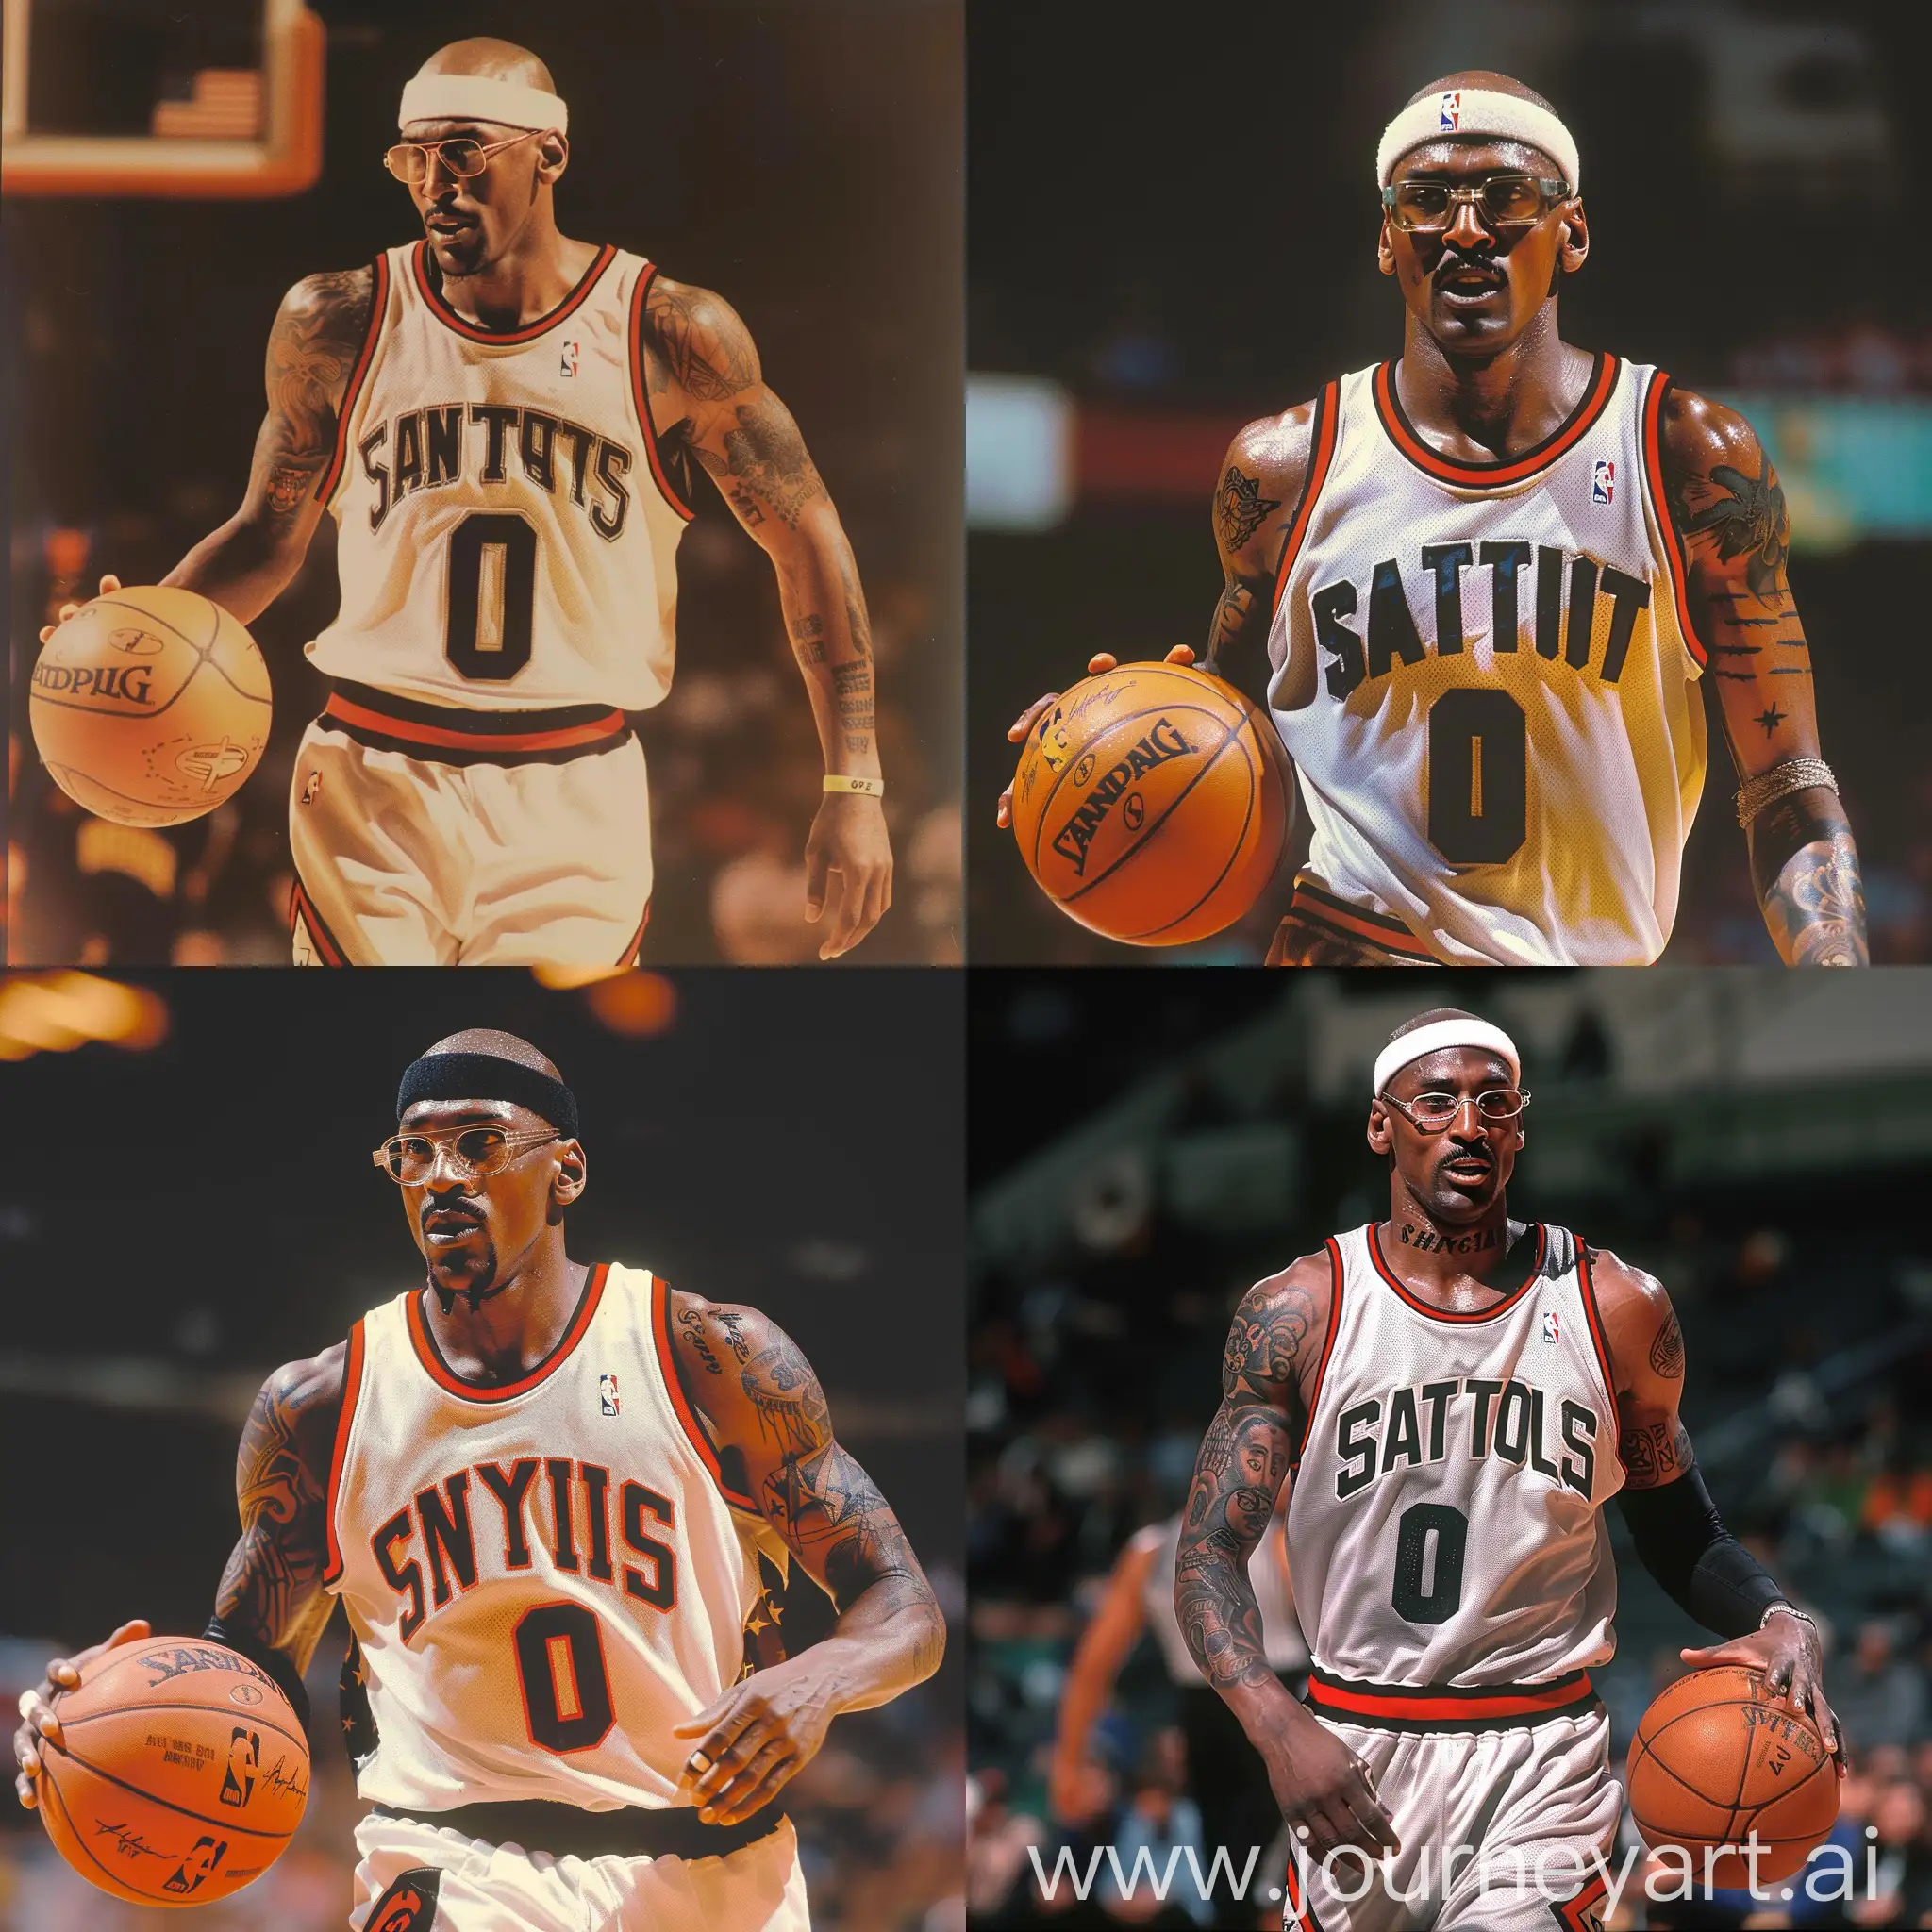 Michael-Jordan-Basketball-Portrait-1990s-San-Antonio-Spurs-Jersey-and-Tattoos